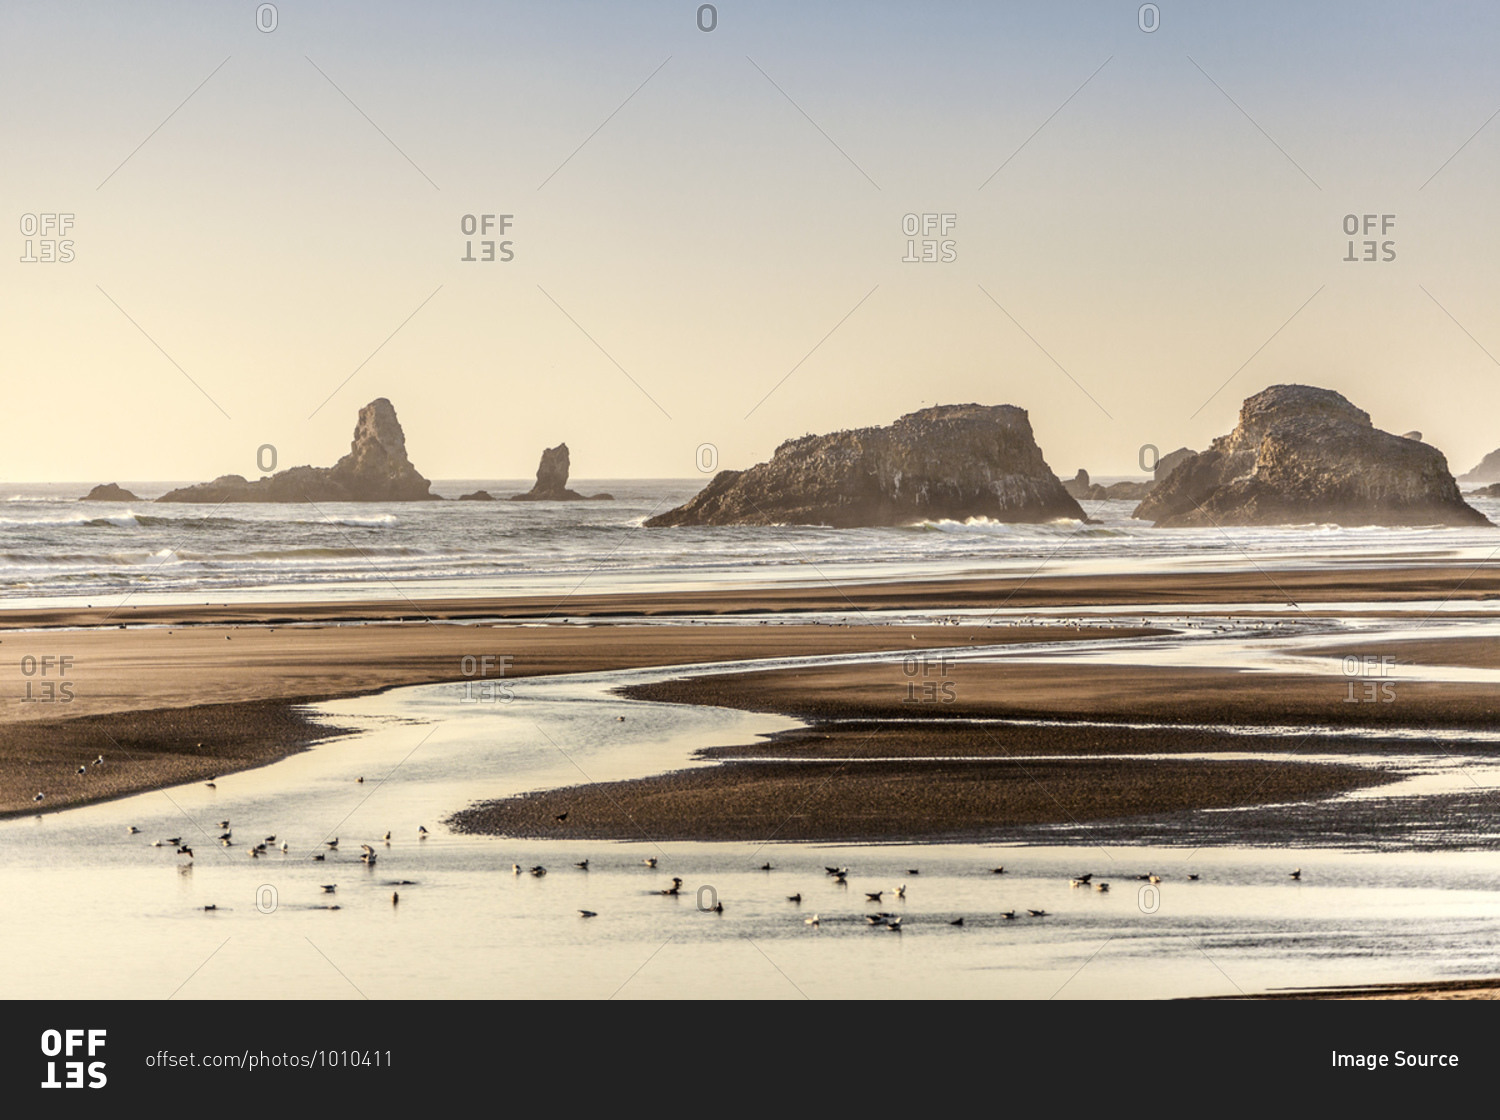 Seabirds wading and feeding on beach, Cannon Beach, Oregon, USA